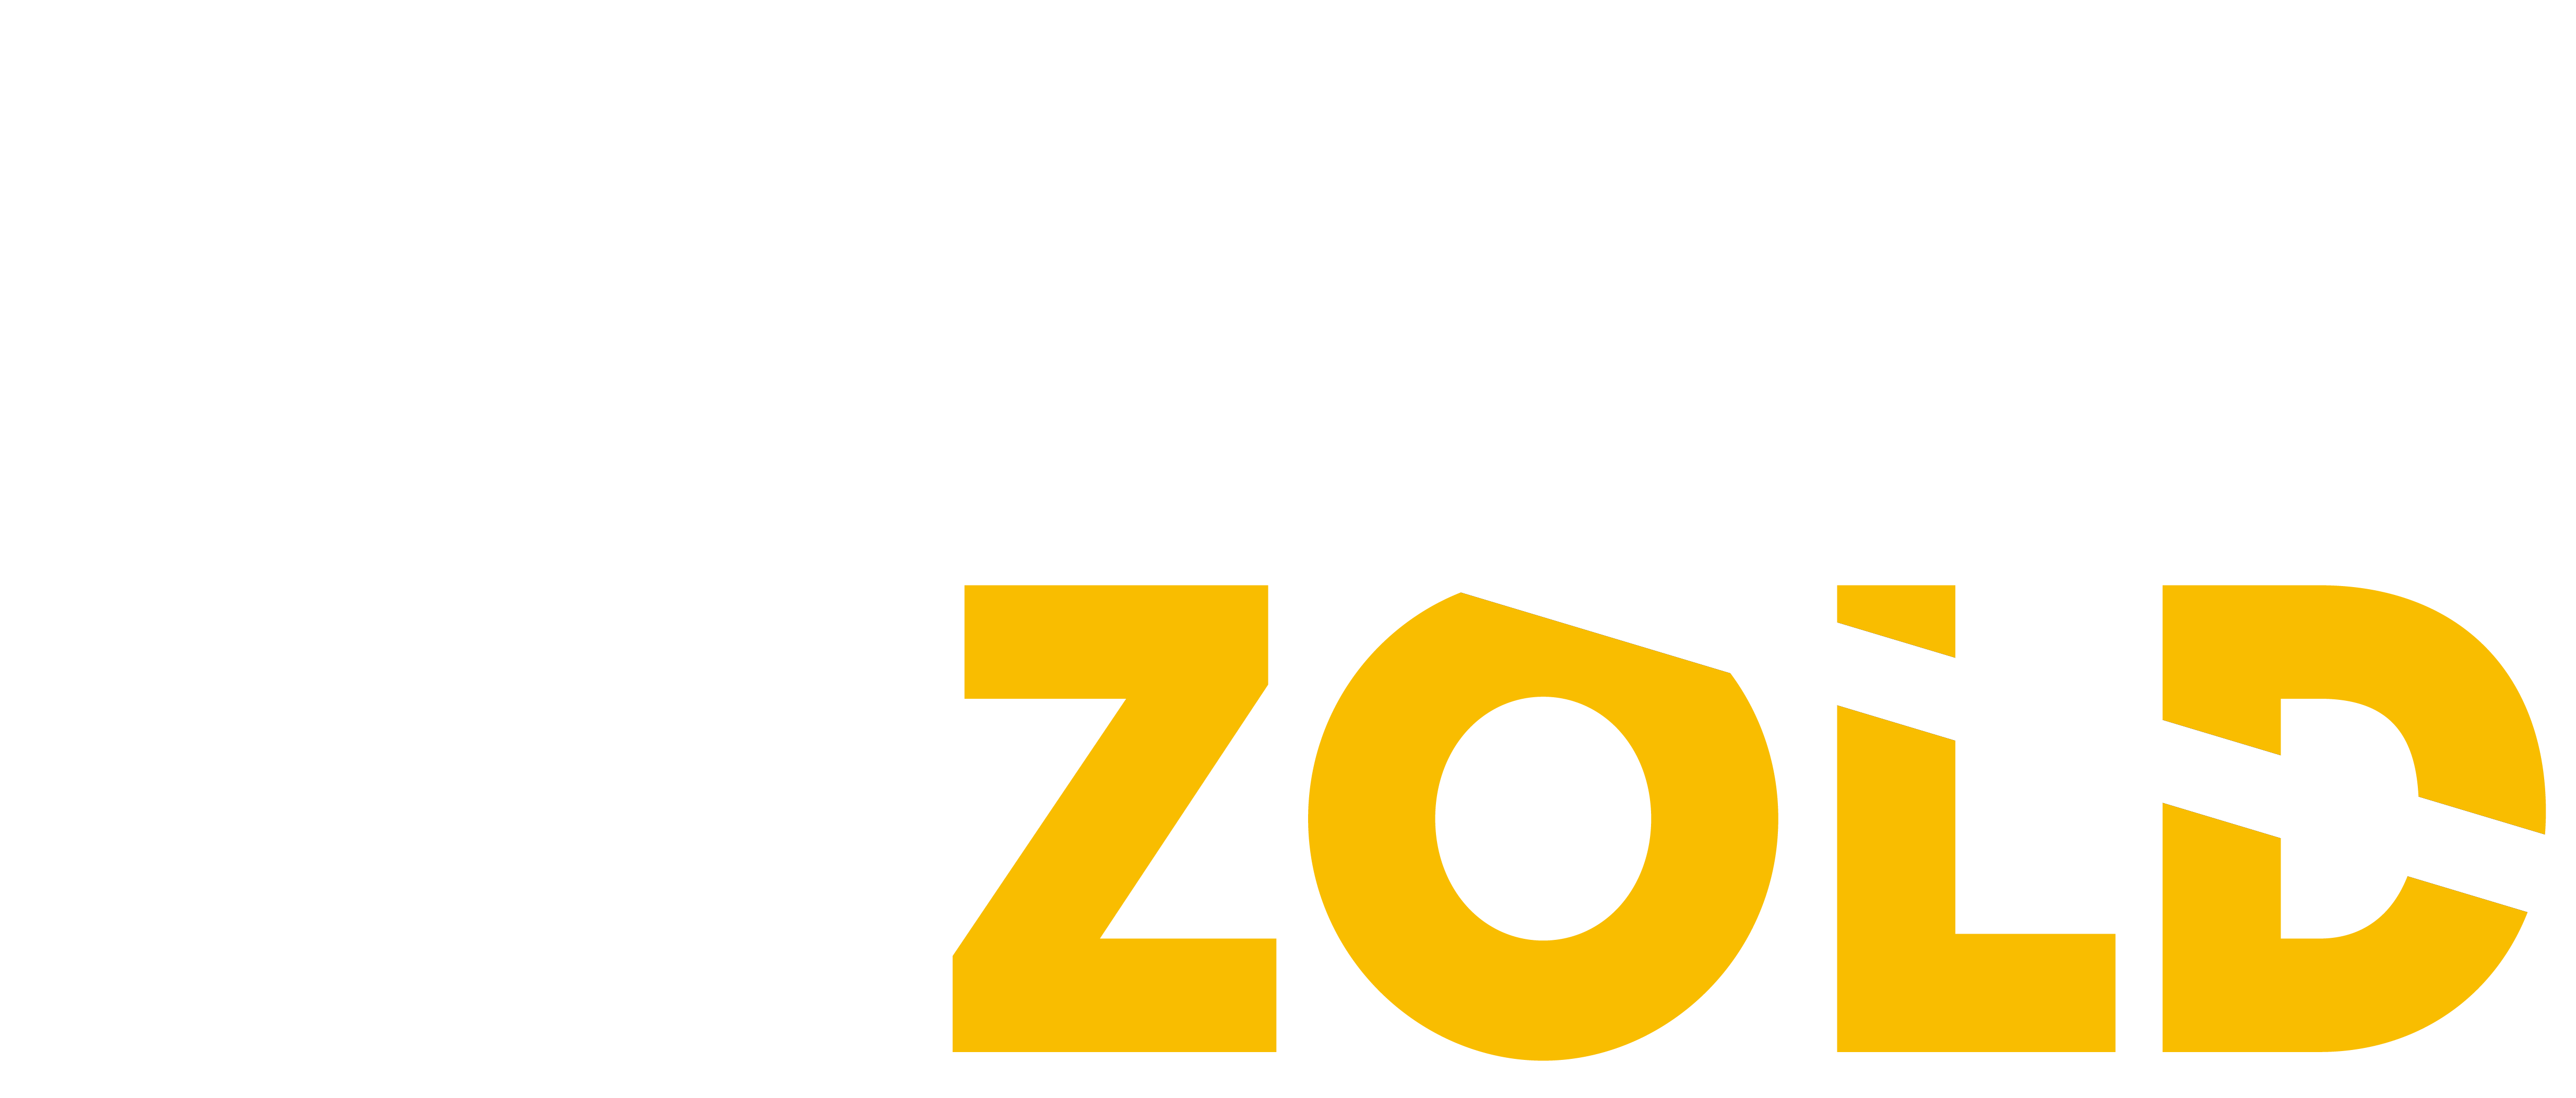 David Zold